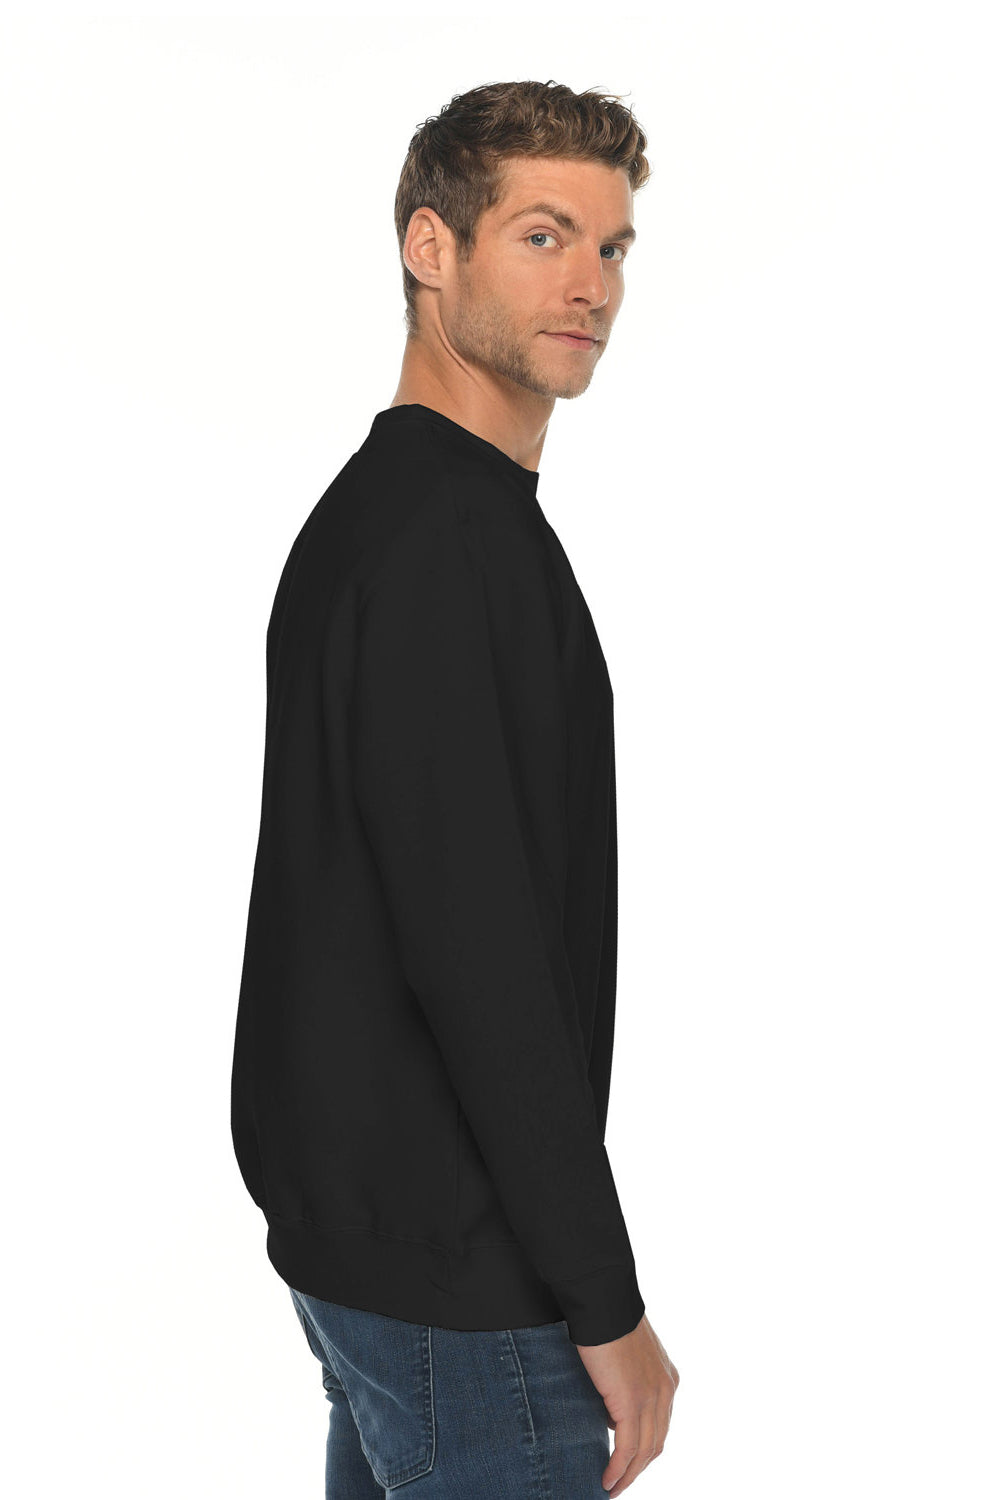 Lane Seven LS14004 Mens Premium Crewneck Sweatshirt Black Side